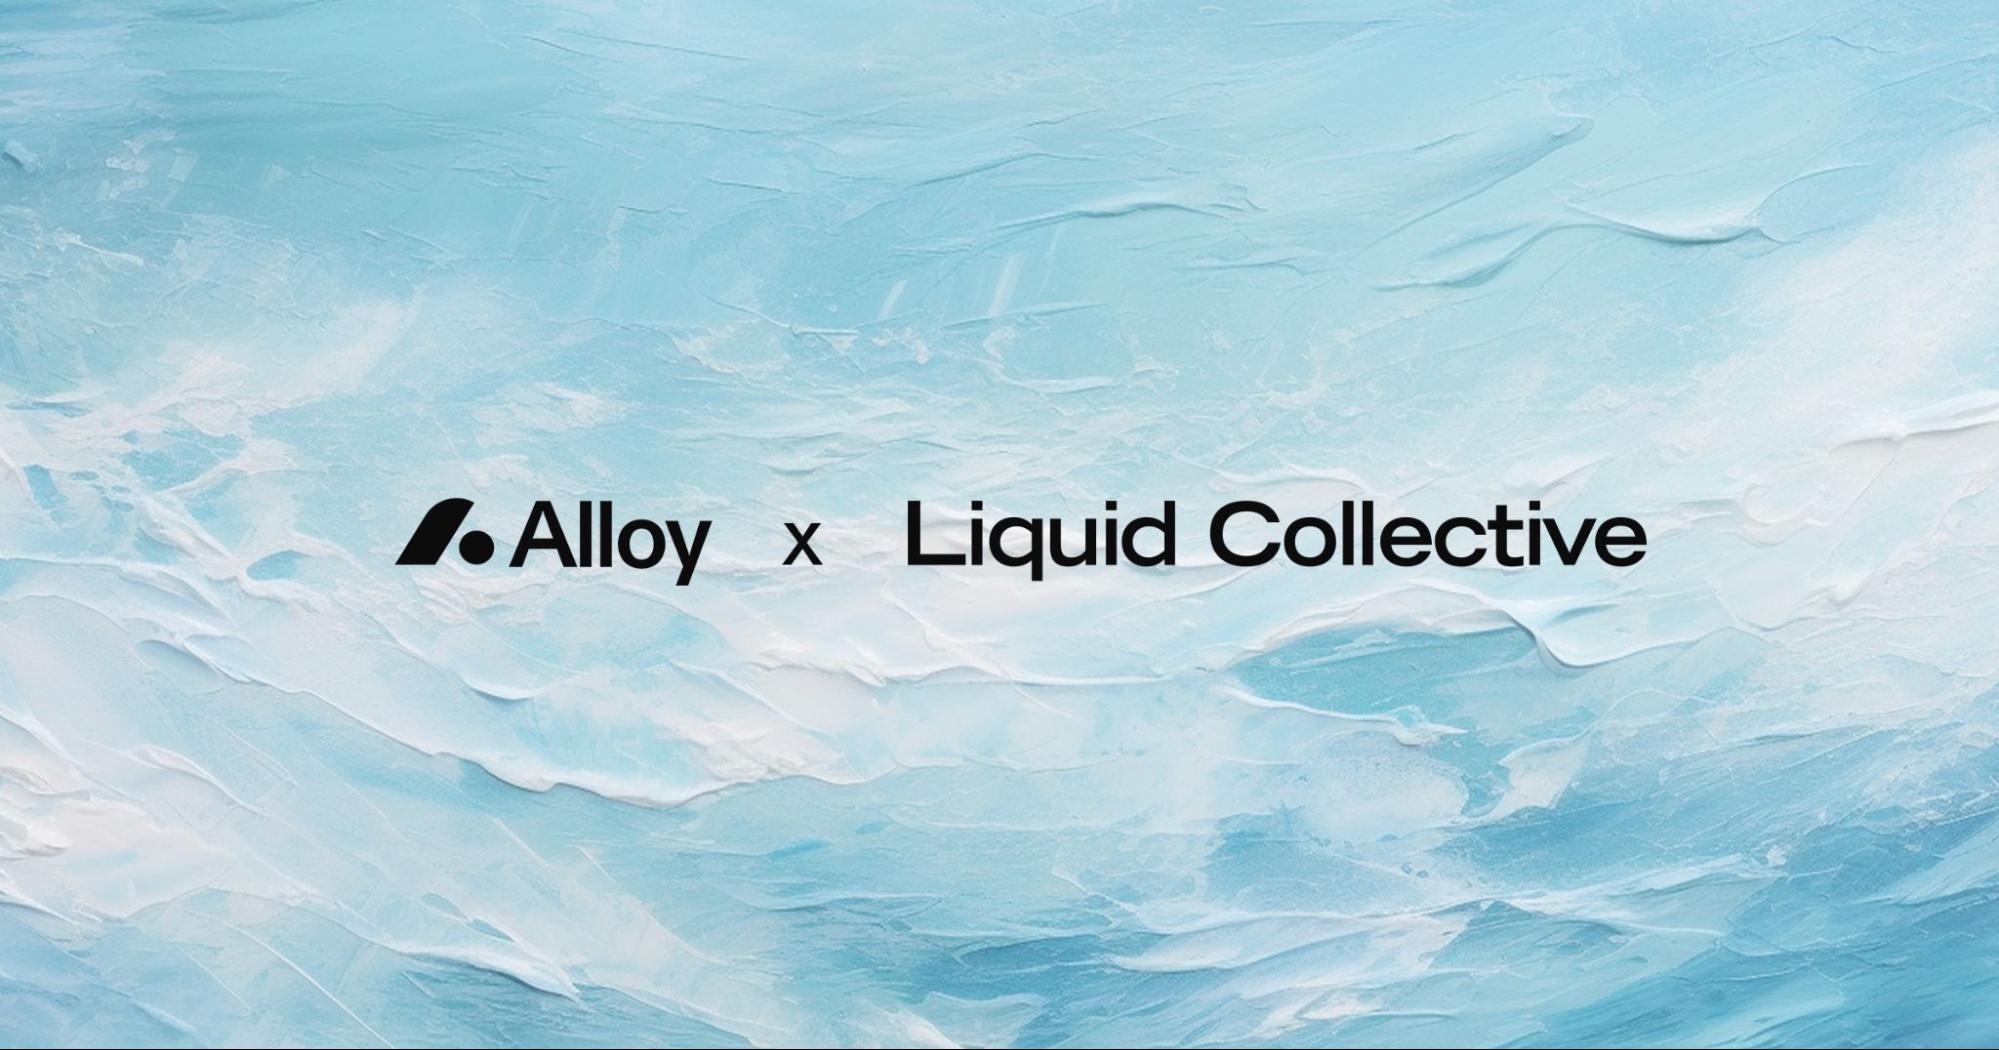 Alloy joins Liquid Collective’s ecosystem, offering enterprise-grade liquid staking through its portfolio management system